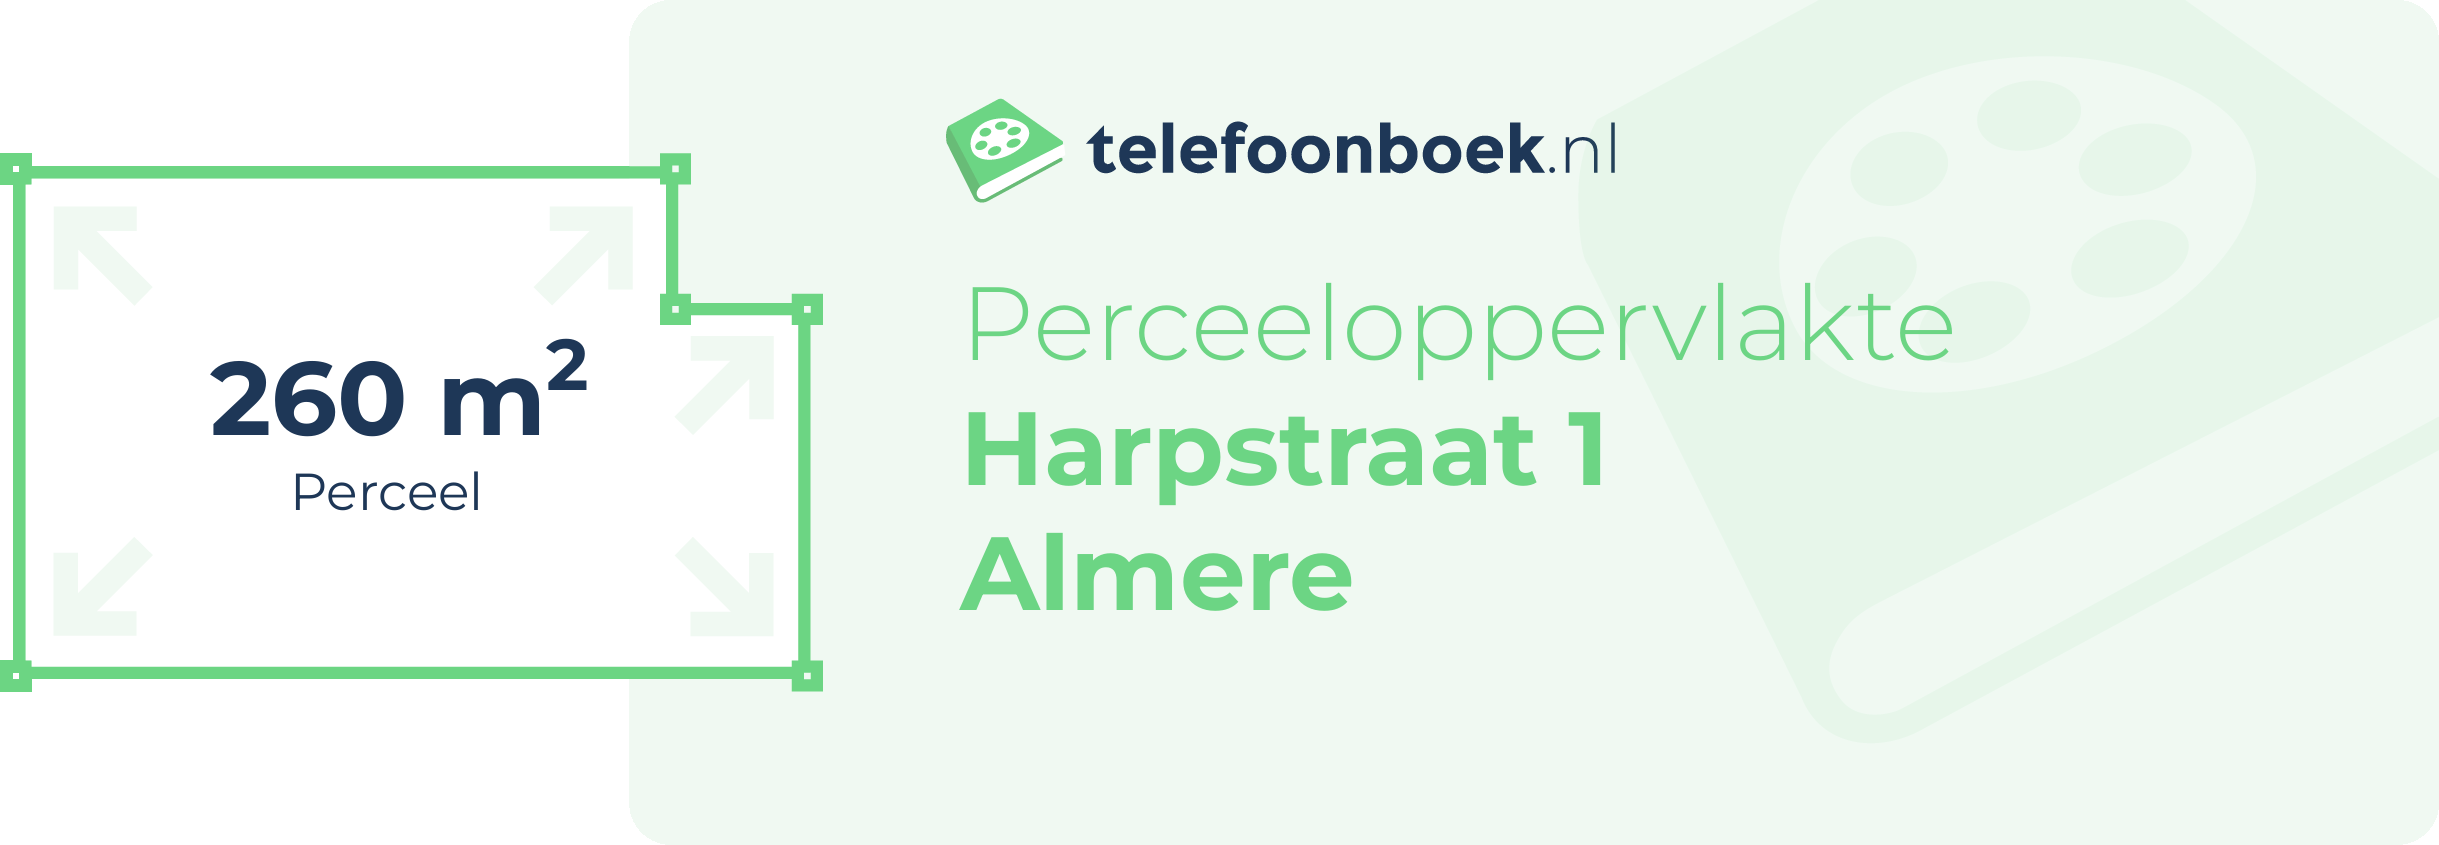 Perceeloppervlakte Harpstraat 1 Almere